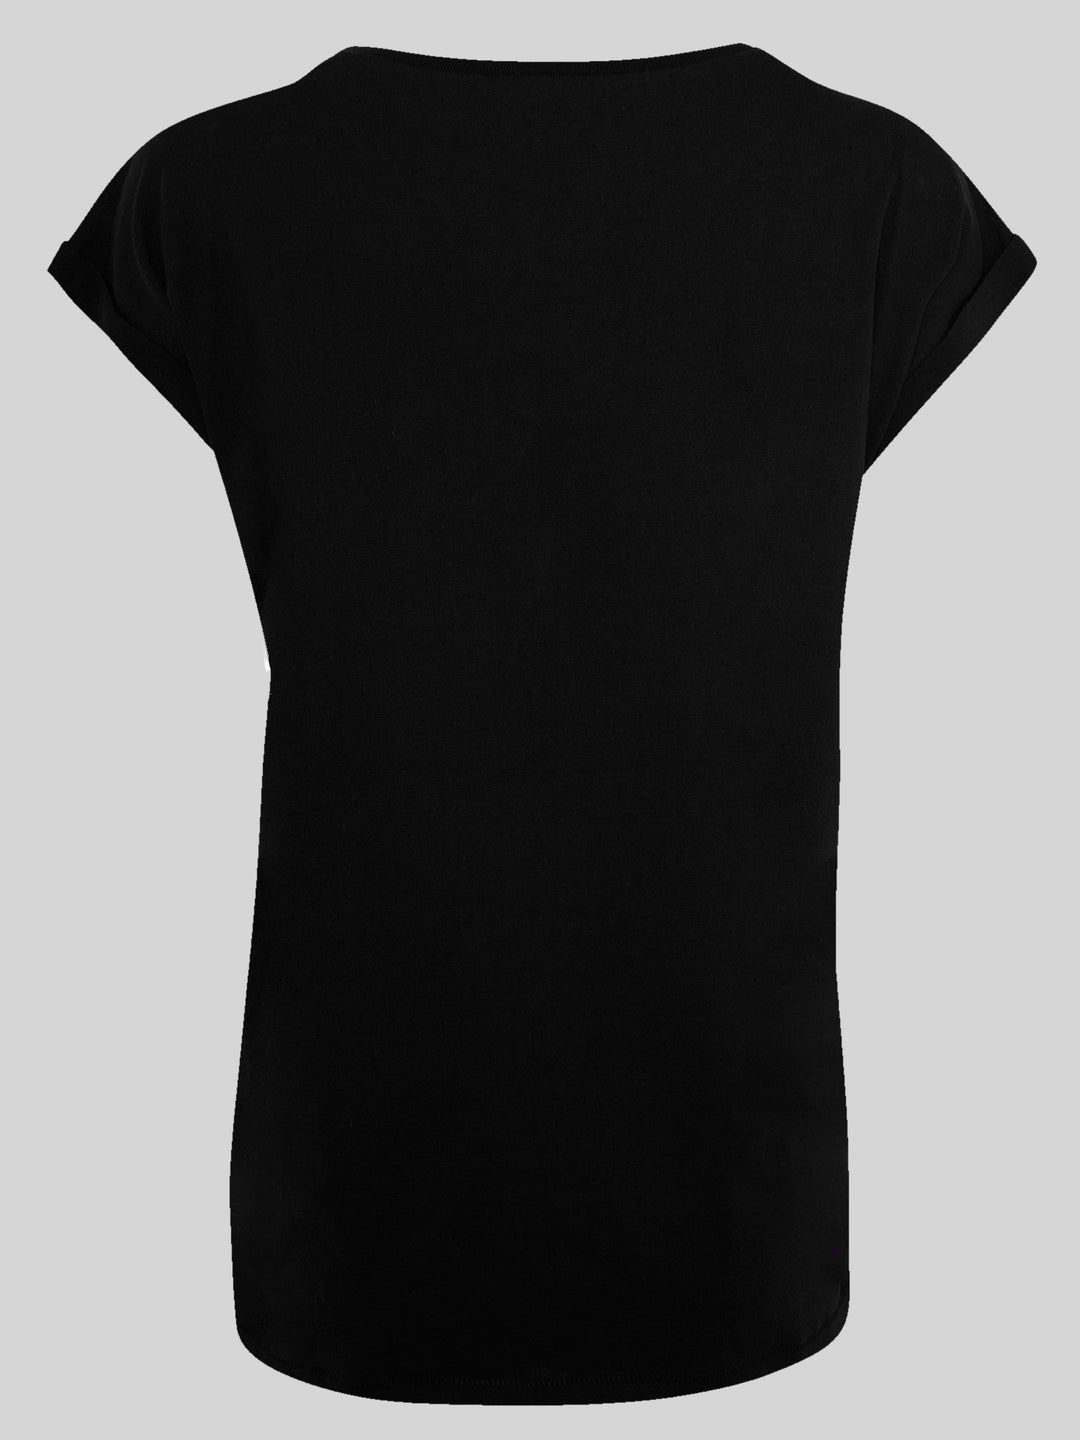 The Beatles T-Shirt | Abbey Road | Premium Short Sleeve Ladies Tee –  F4NT4STIC